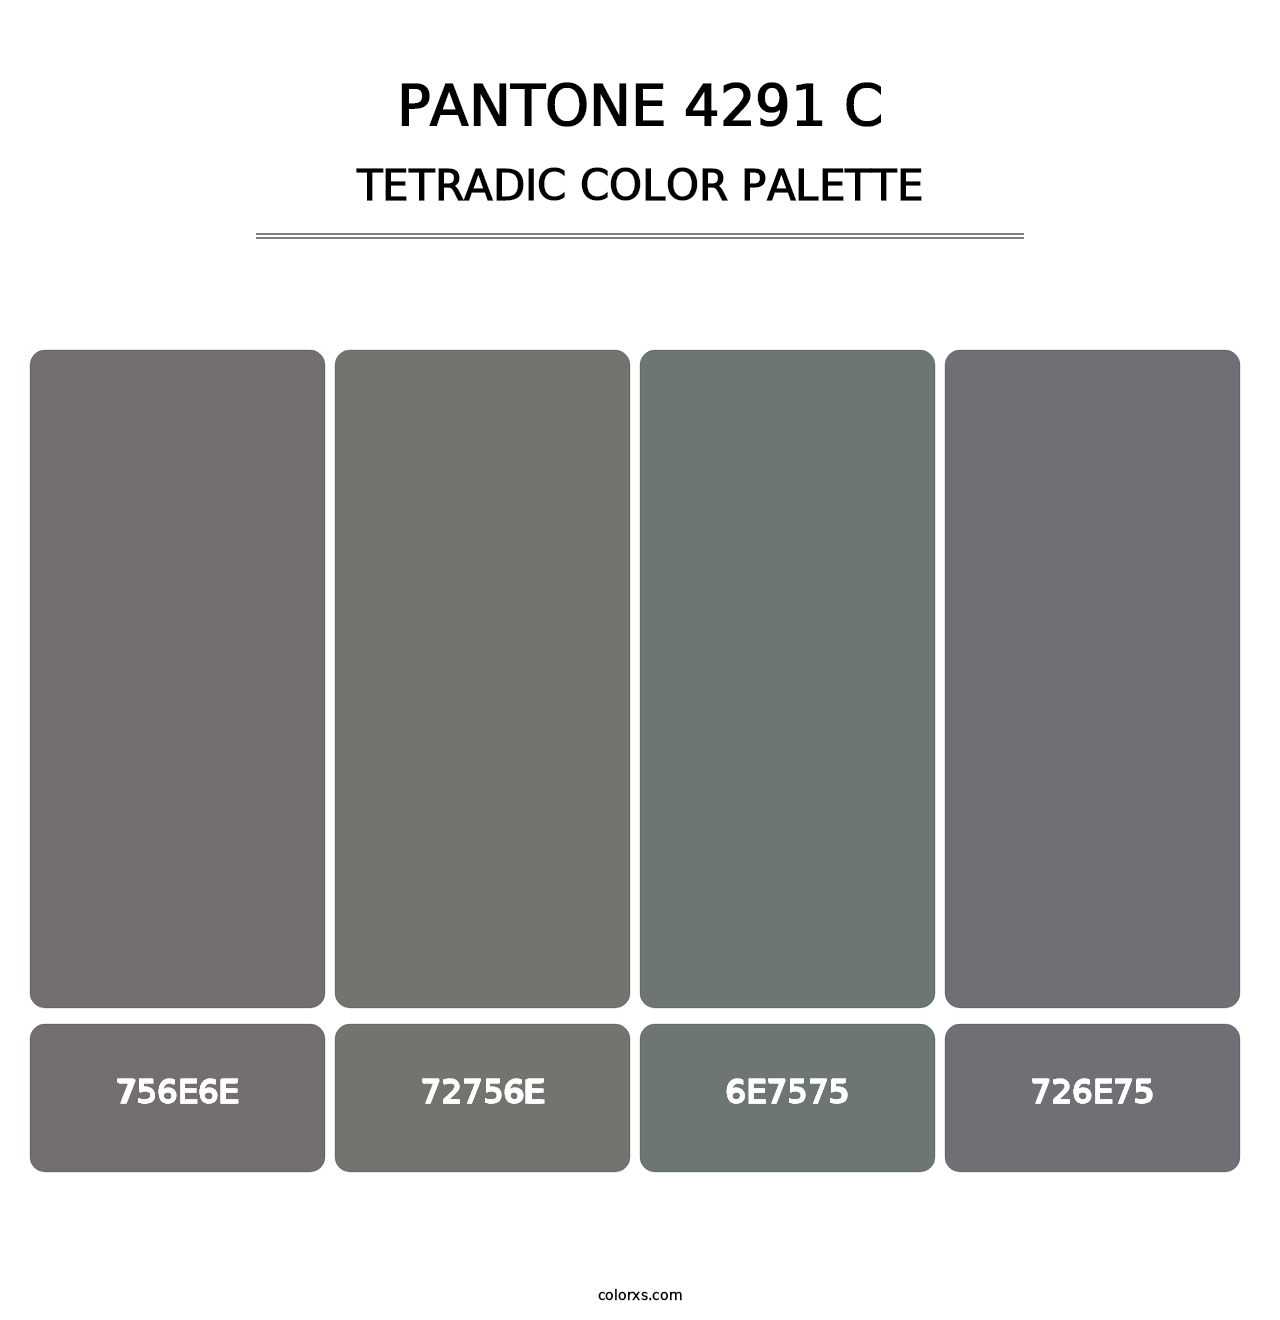 PANTONE 4291 C - Tetradic Color Palette